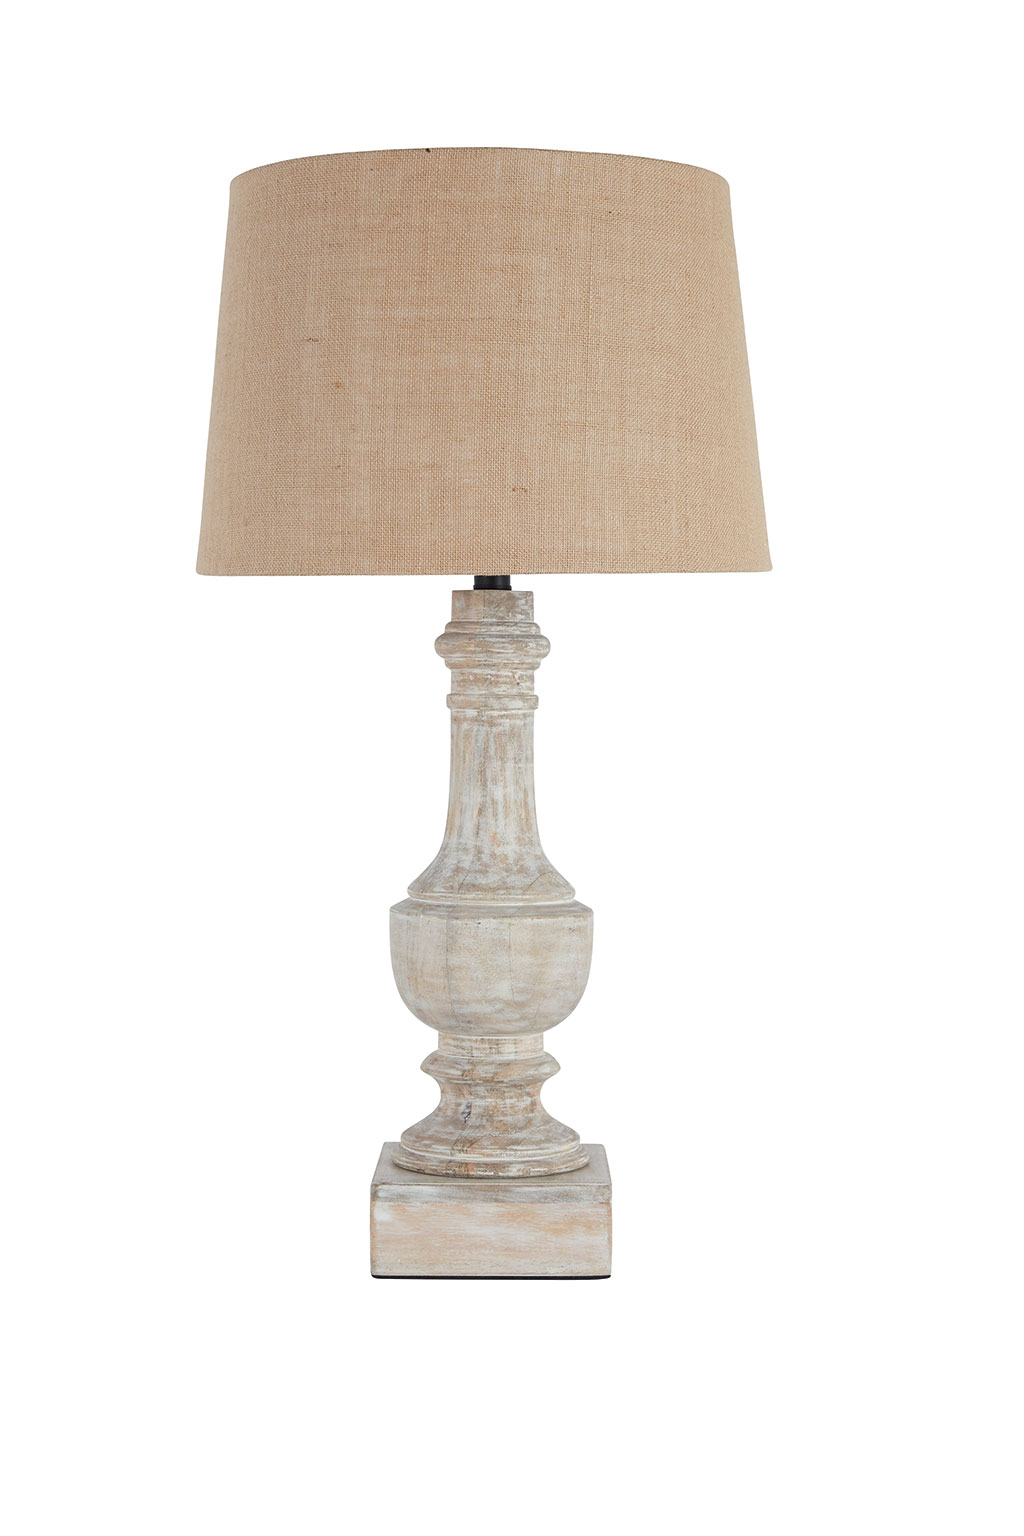 L327104 Table Lamp - White Wash